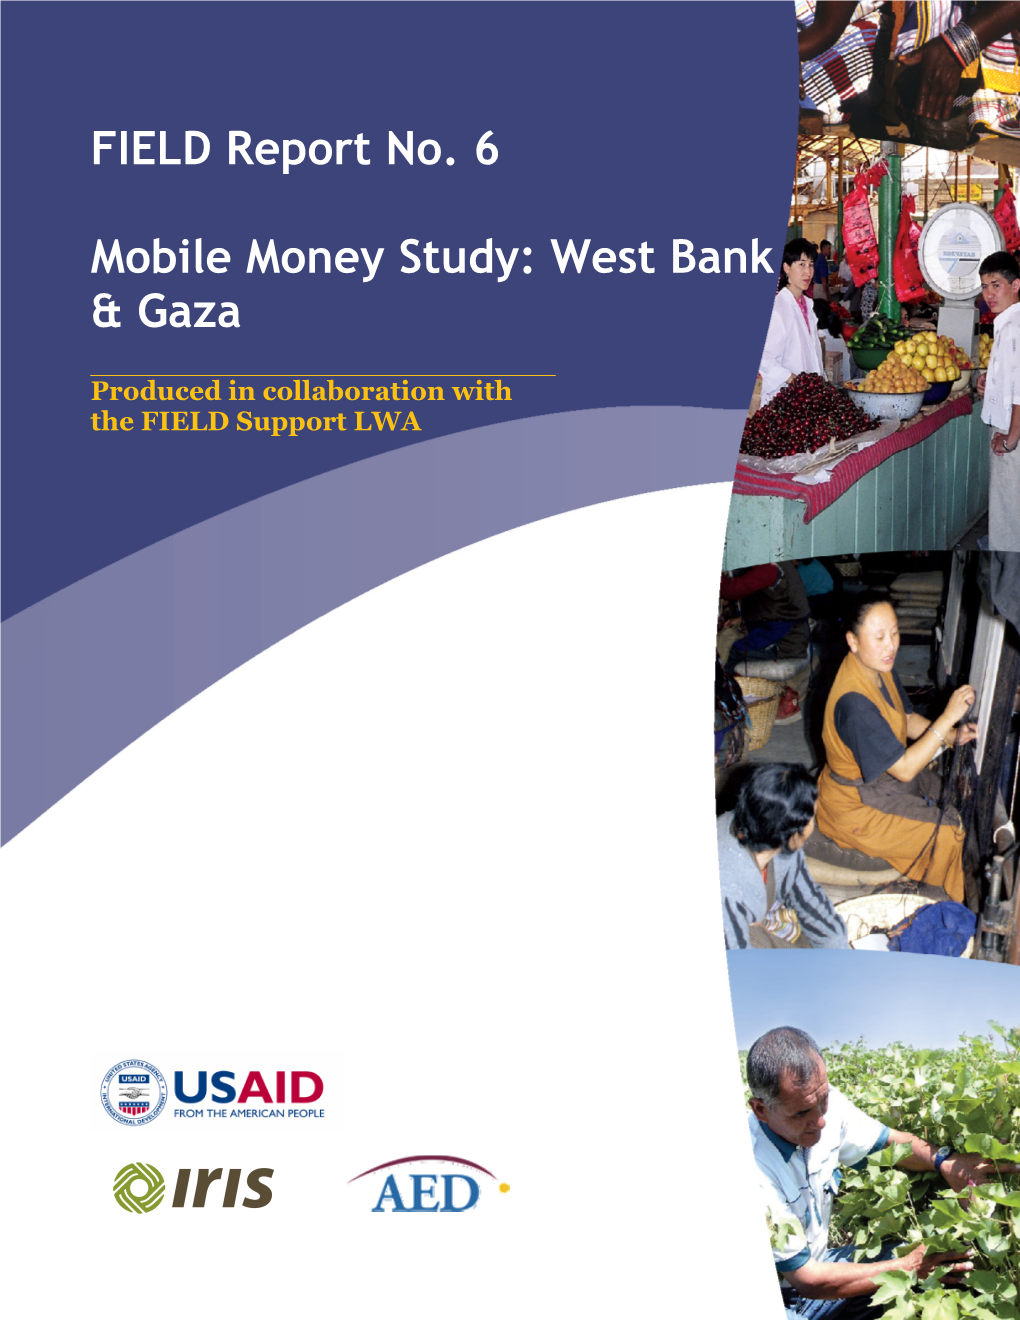 FIELD Report No. 6 Mobile Money Study: West Bank & Gaza